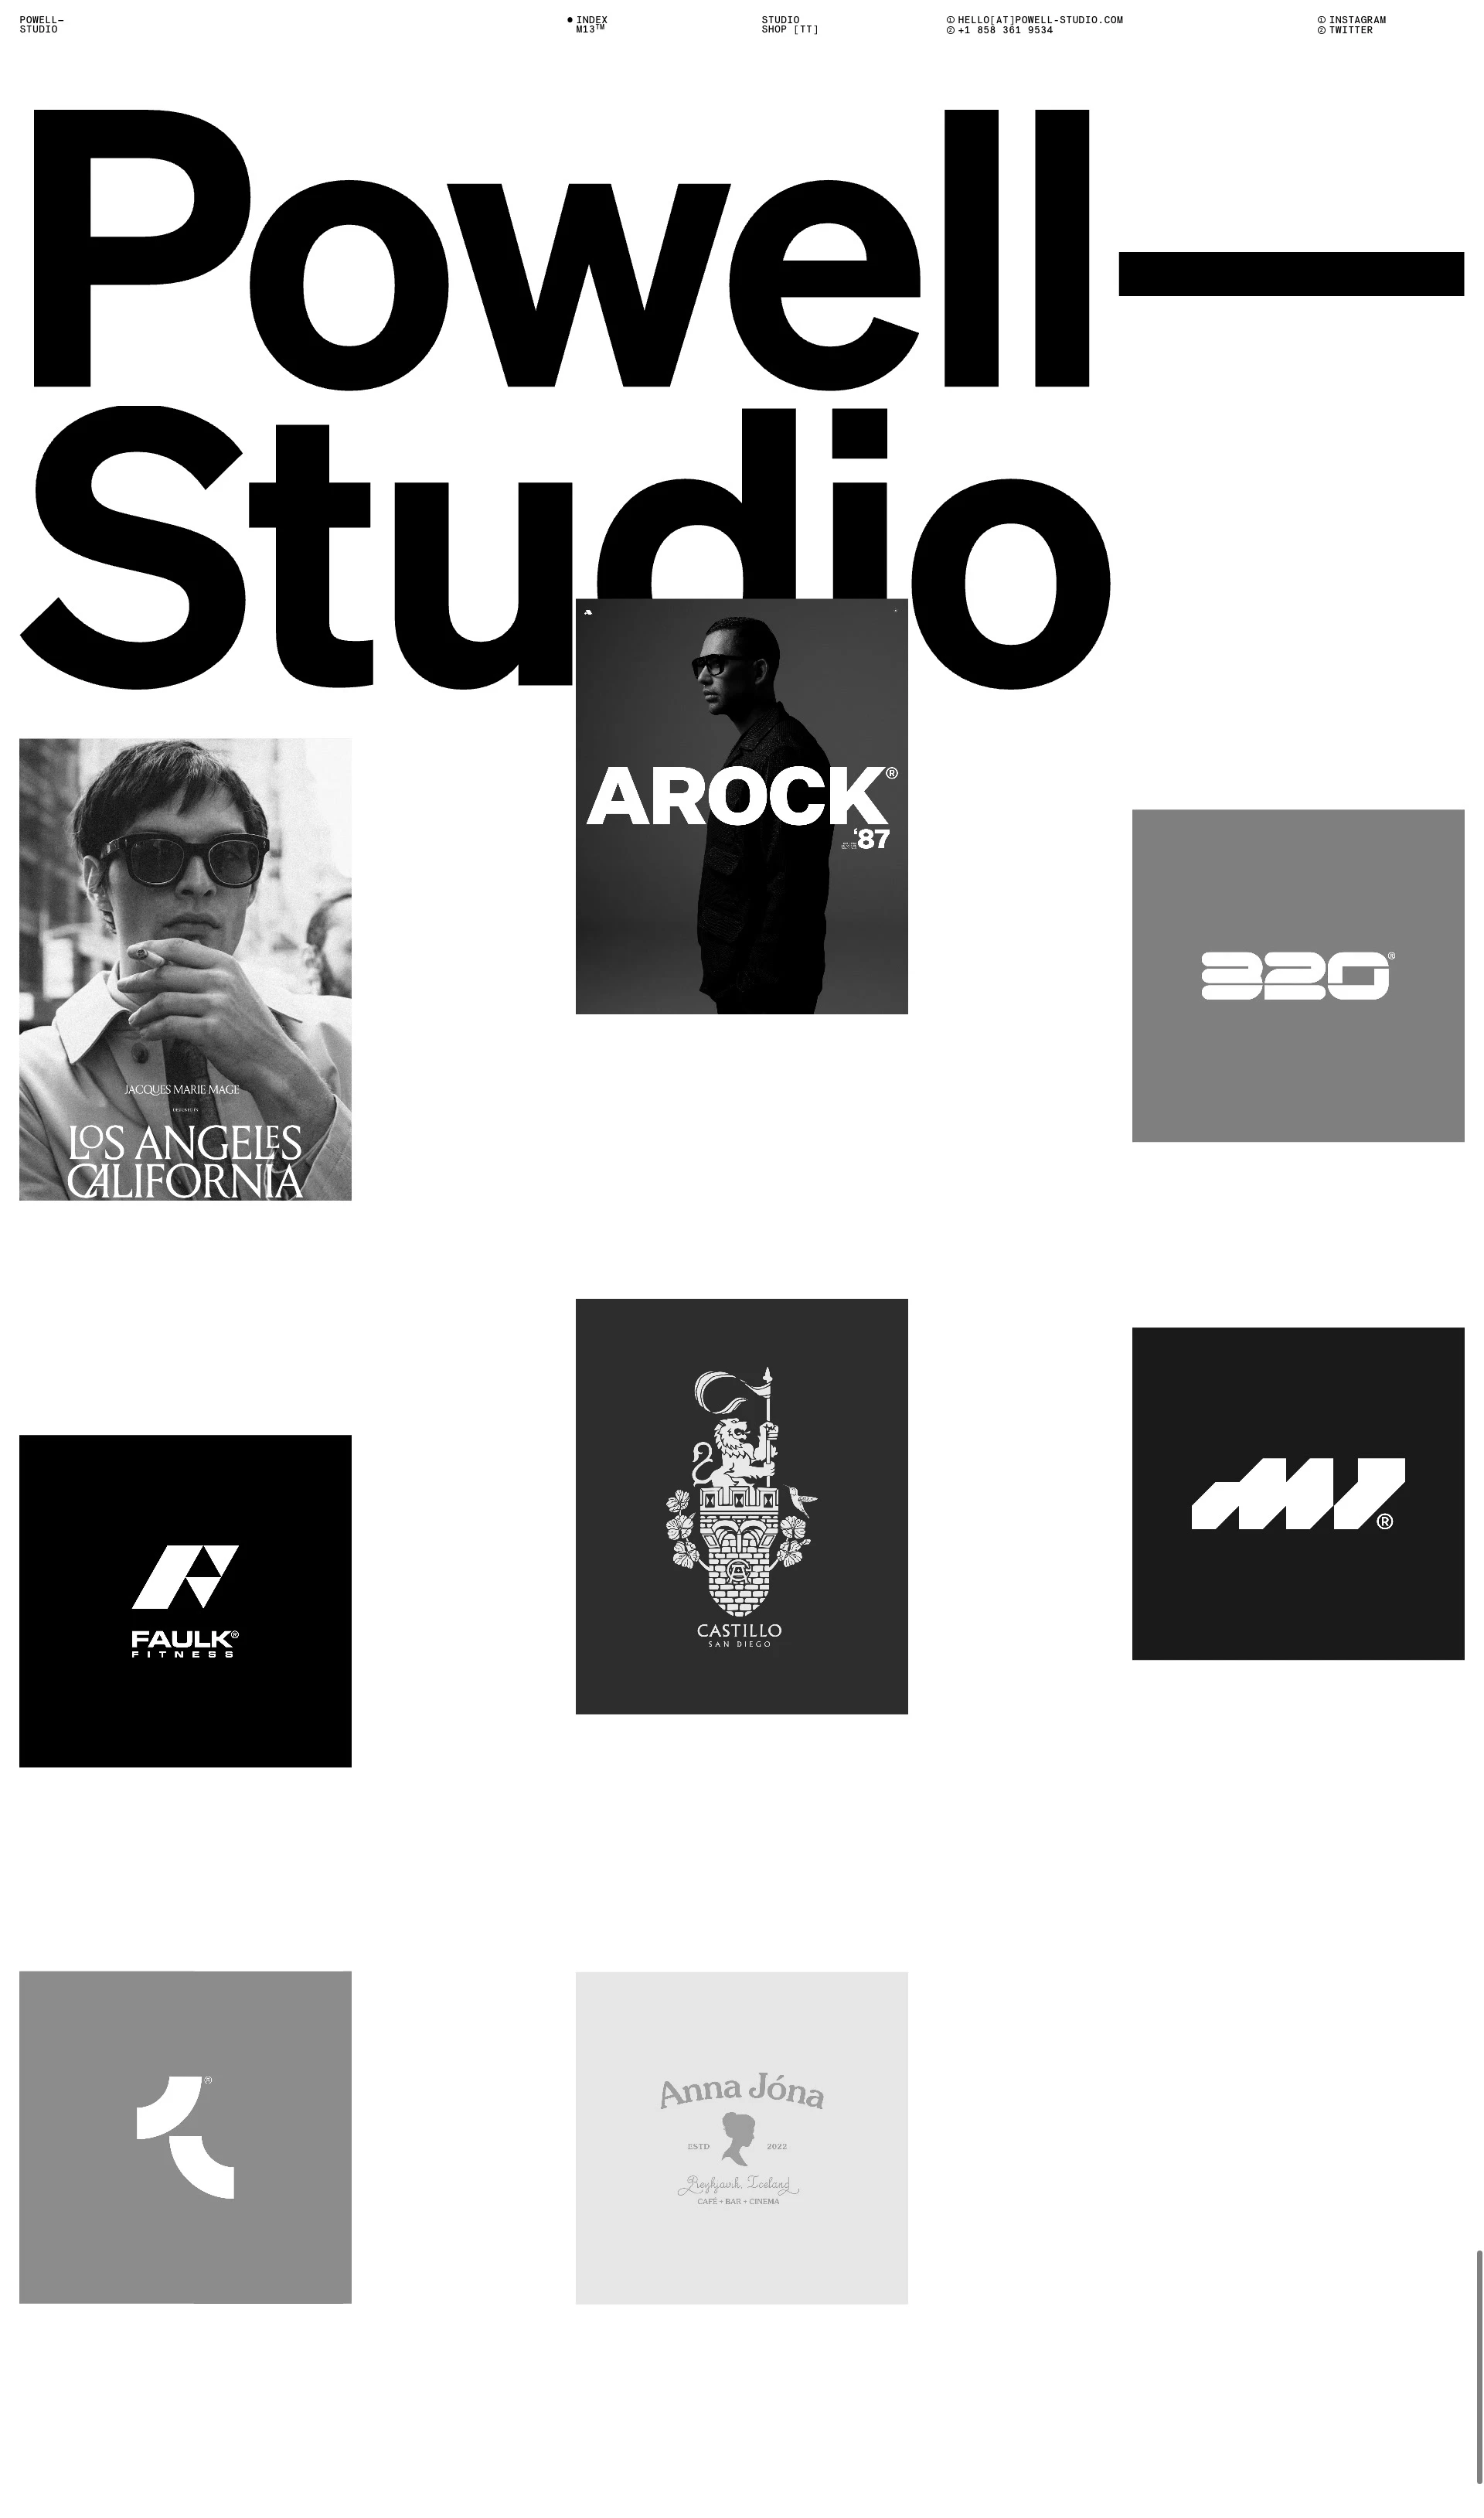 Powell—Studio Landing Page Example: The creative studio of Brijan Powell in Salt Lake City, UT - Branding / Type / Web Design / Graphic Design / Art Direction / Materials / Objects / Digital / Social Media